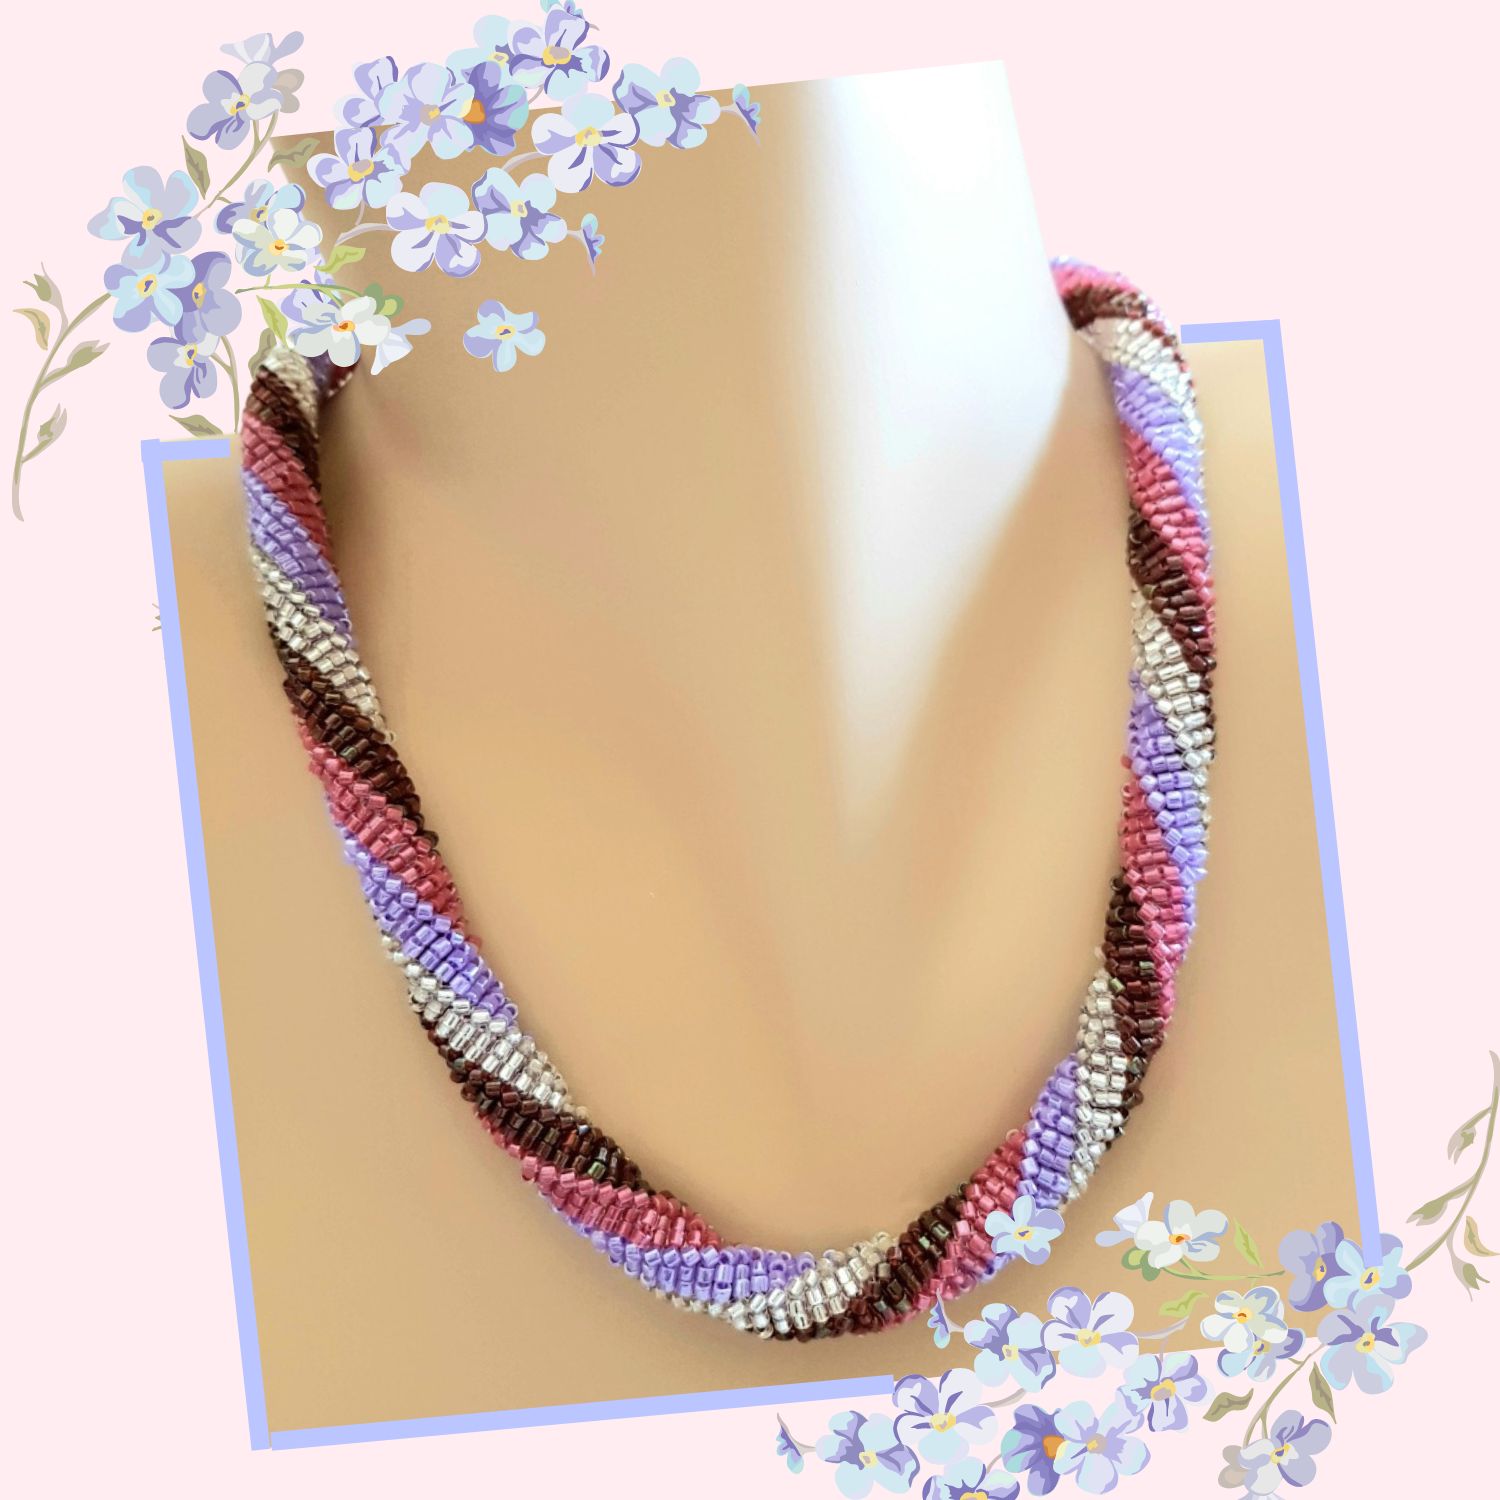 Tatiana - Colored beads necklace